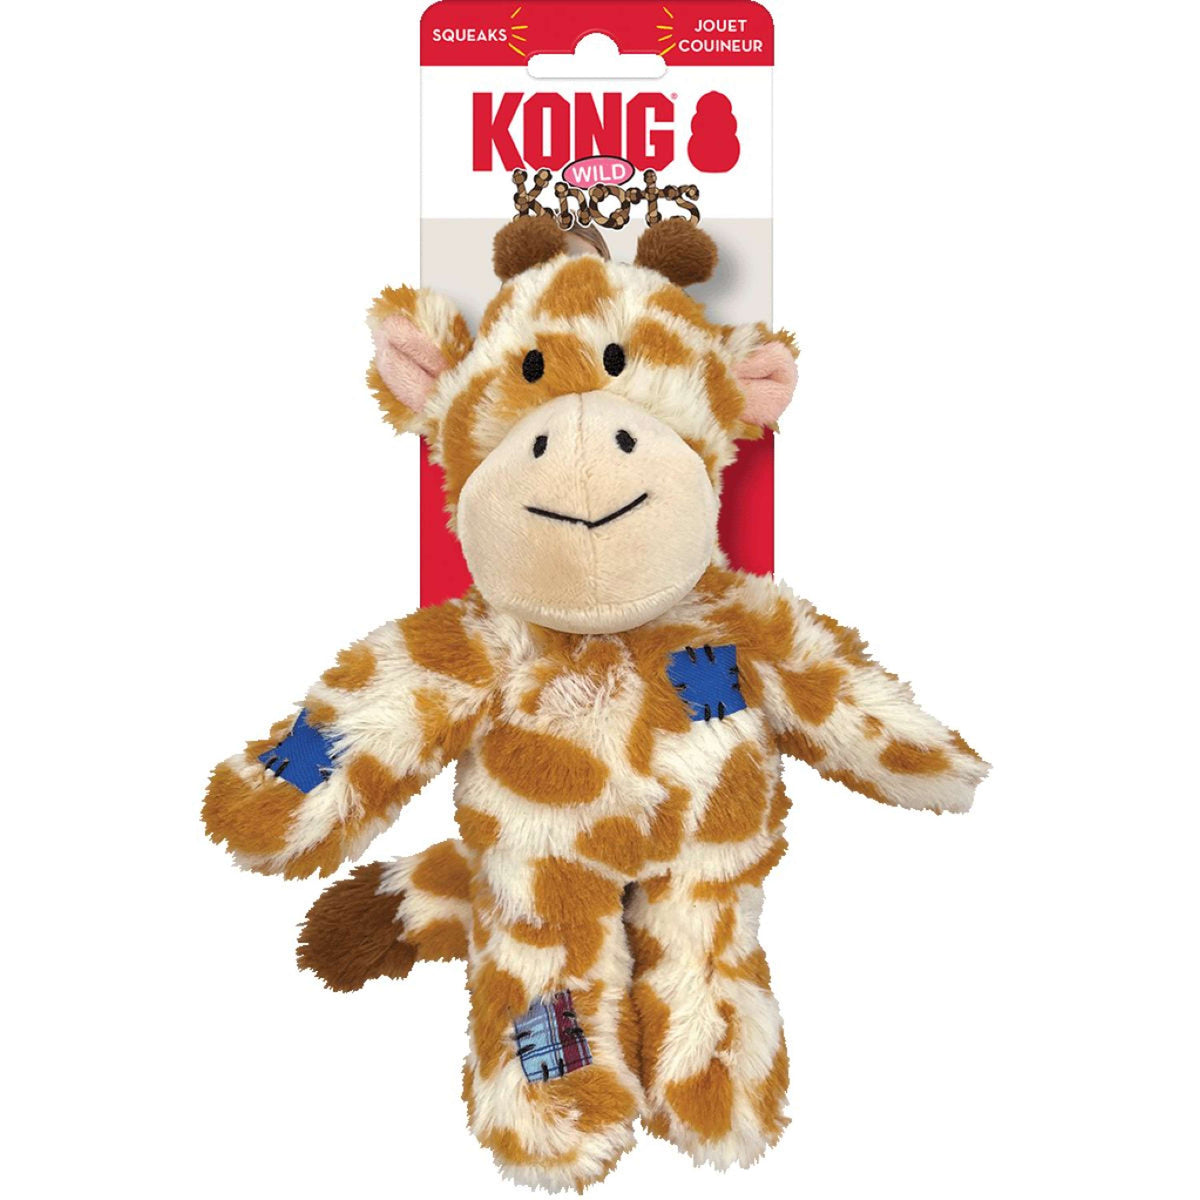 KONG Hundespielzeug Wild Knots Giraffe